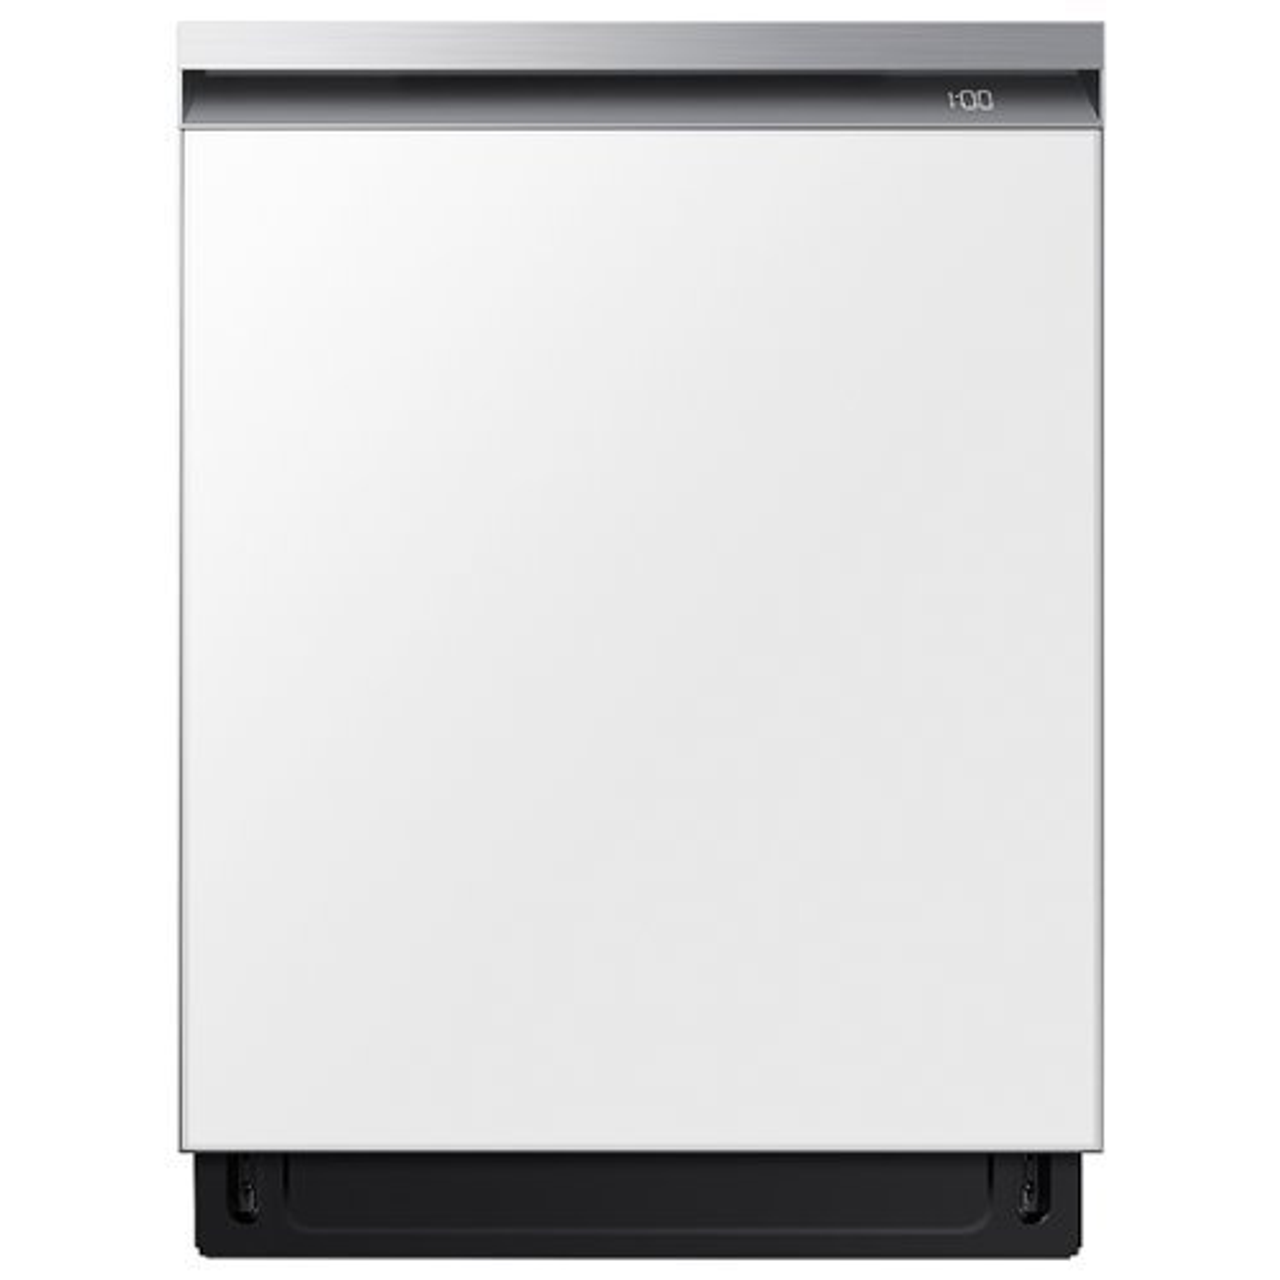 Samsung - Smart 42dBA Dishwasher with StormWash+ and Smart Dry - White Glass